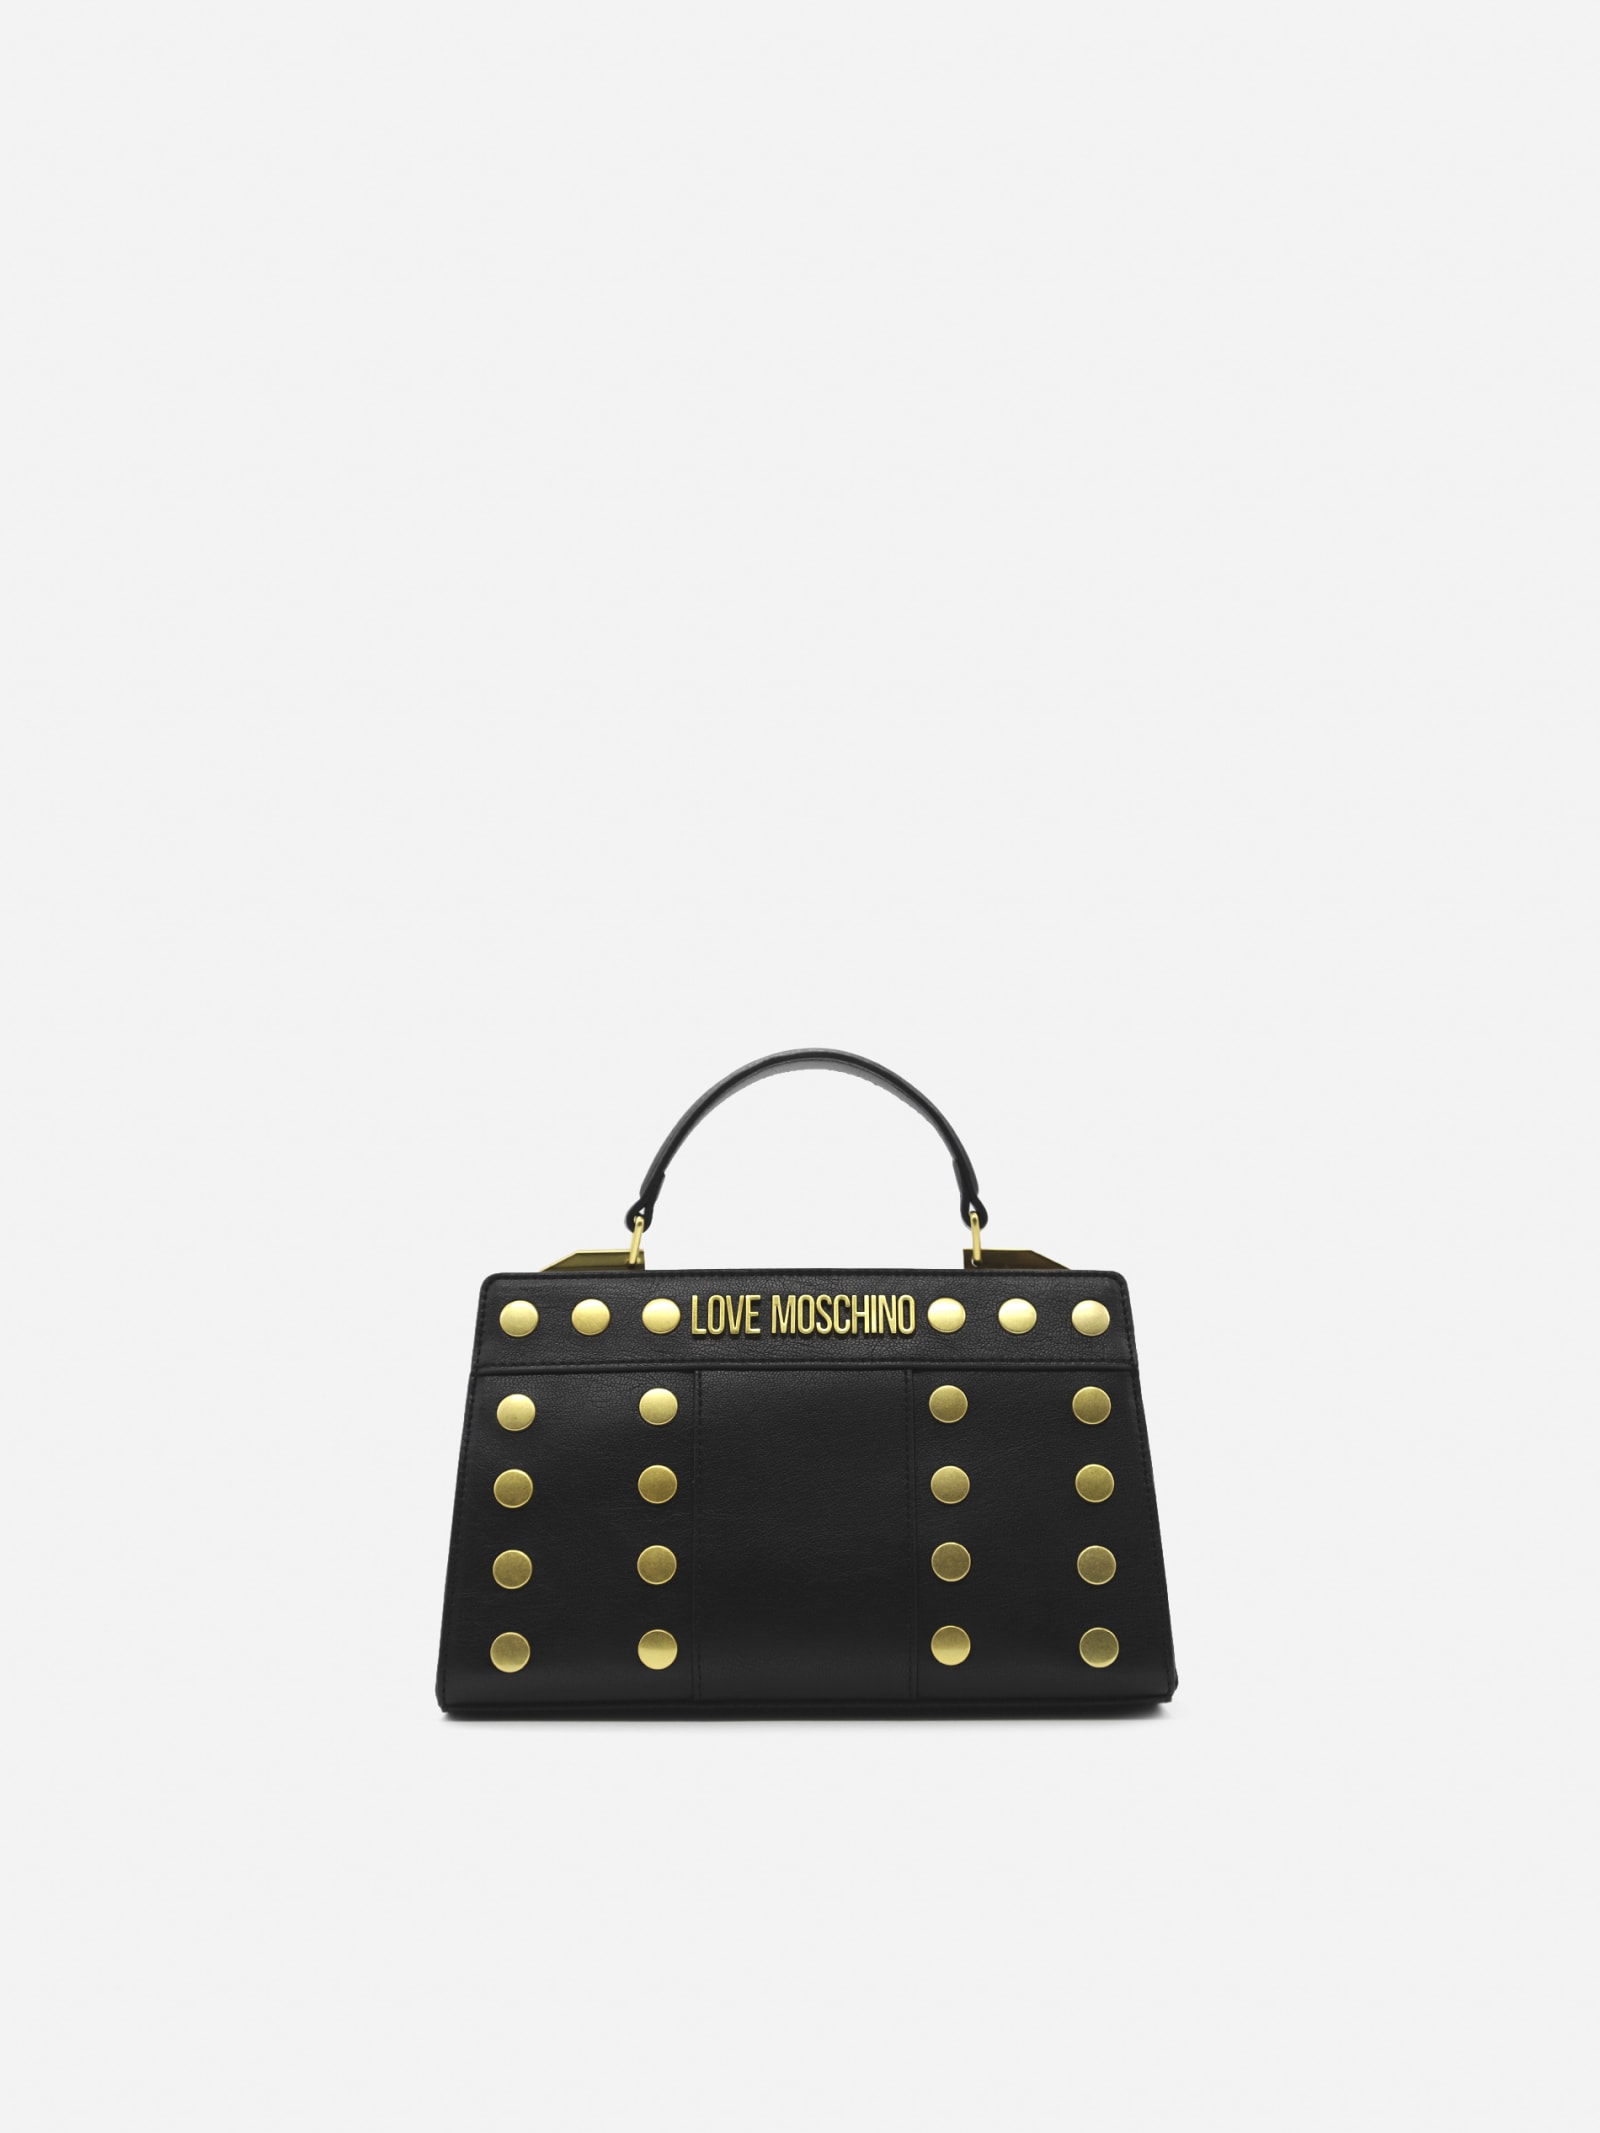 Love Moschino Handbag With Contrasting Studs Detail